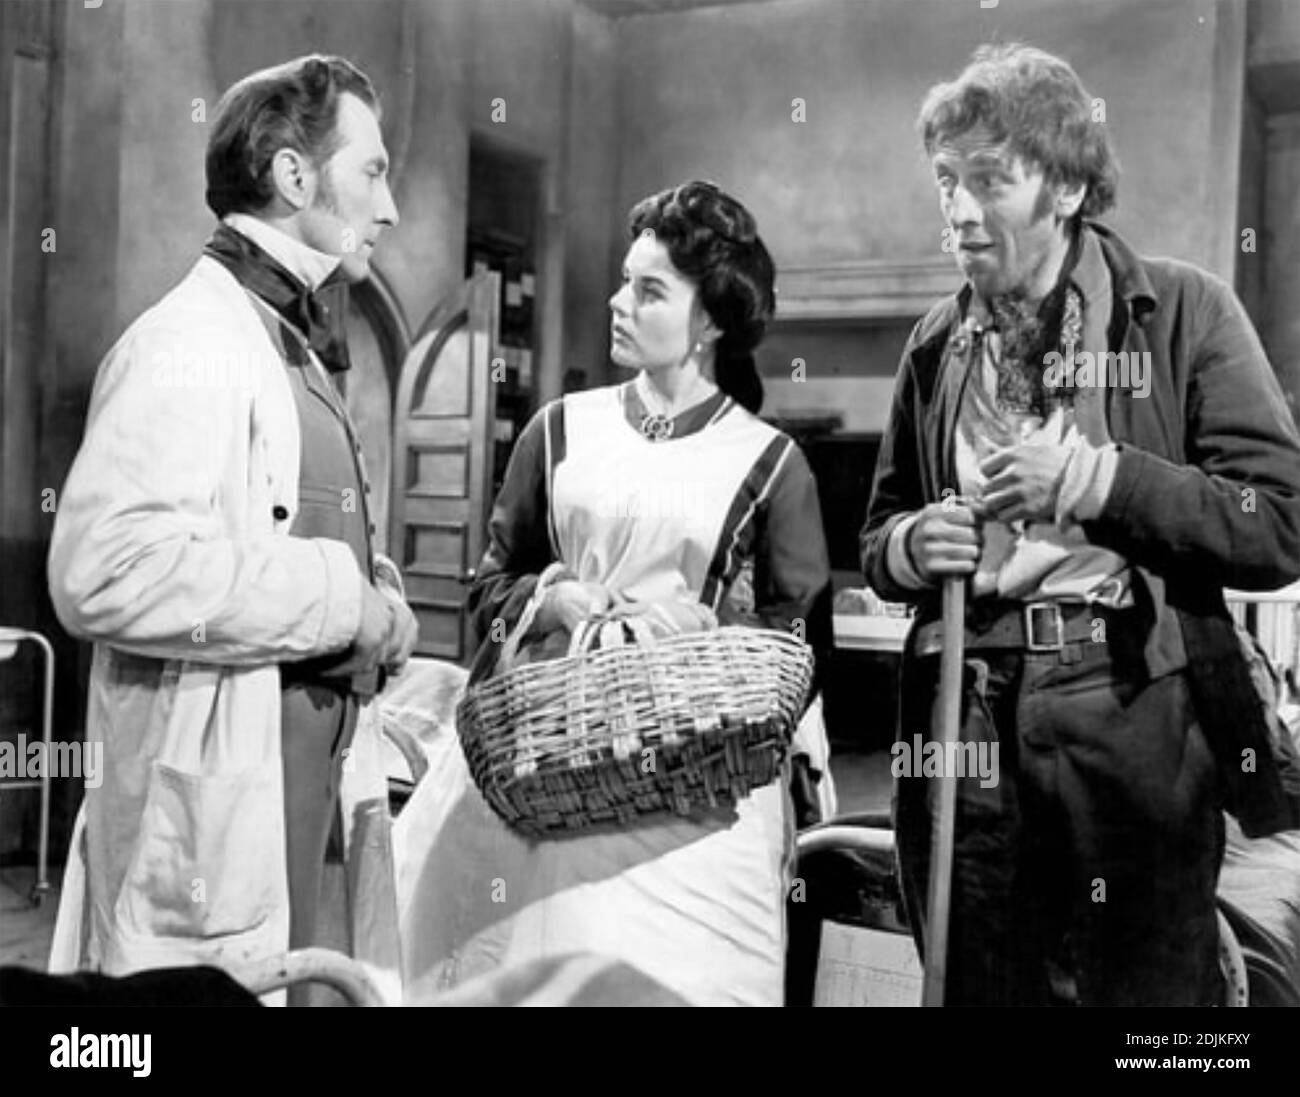 THE REVENGE OF FRANKENSTEIN 1958 Columbia Pictures film avec Peter Cushing à gauche, Eunice Gayson et Richard Wordsworth Banque D'Images